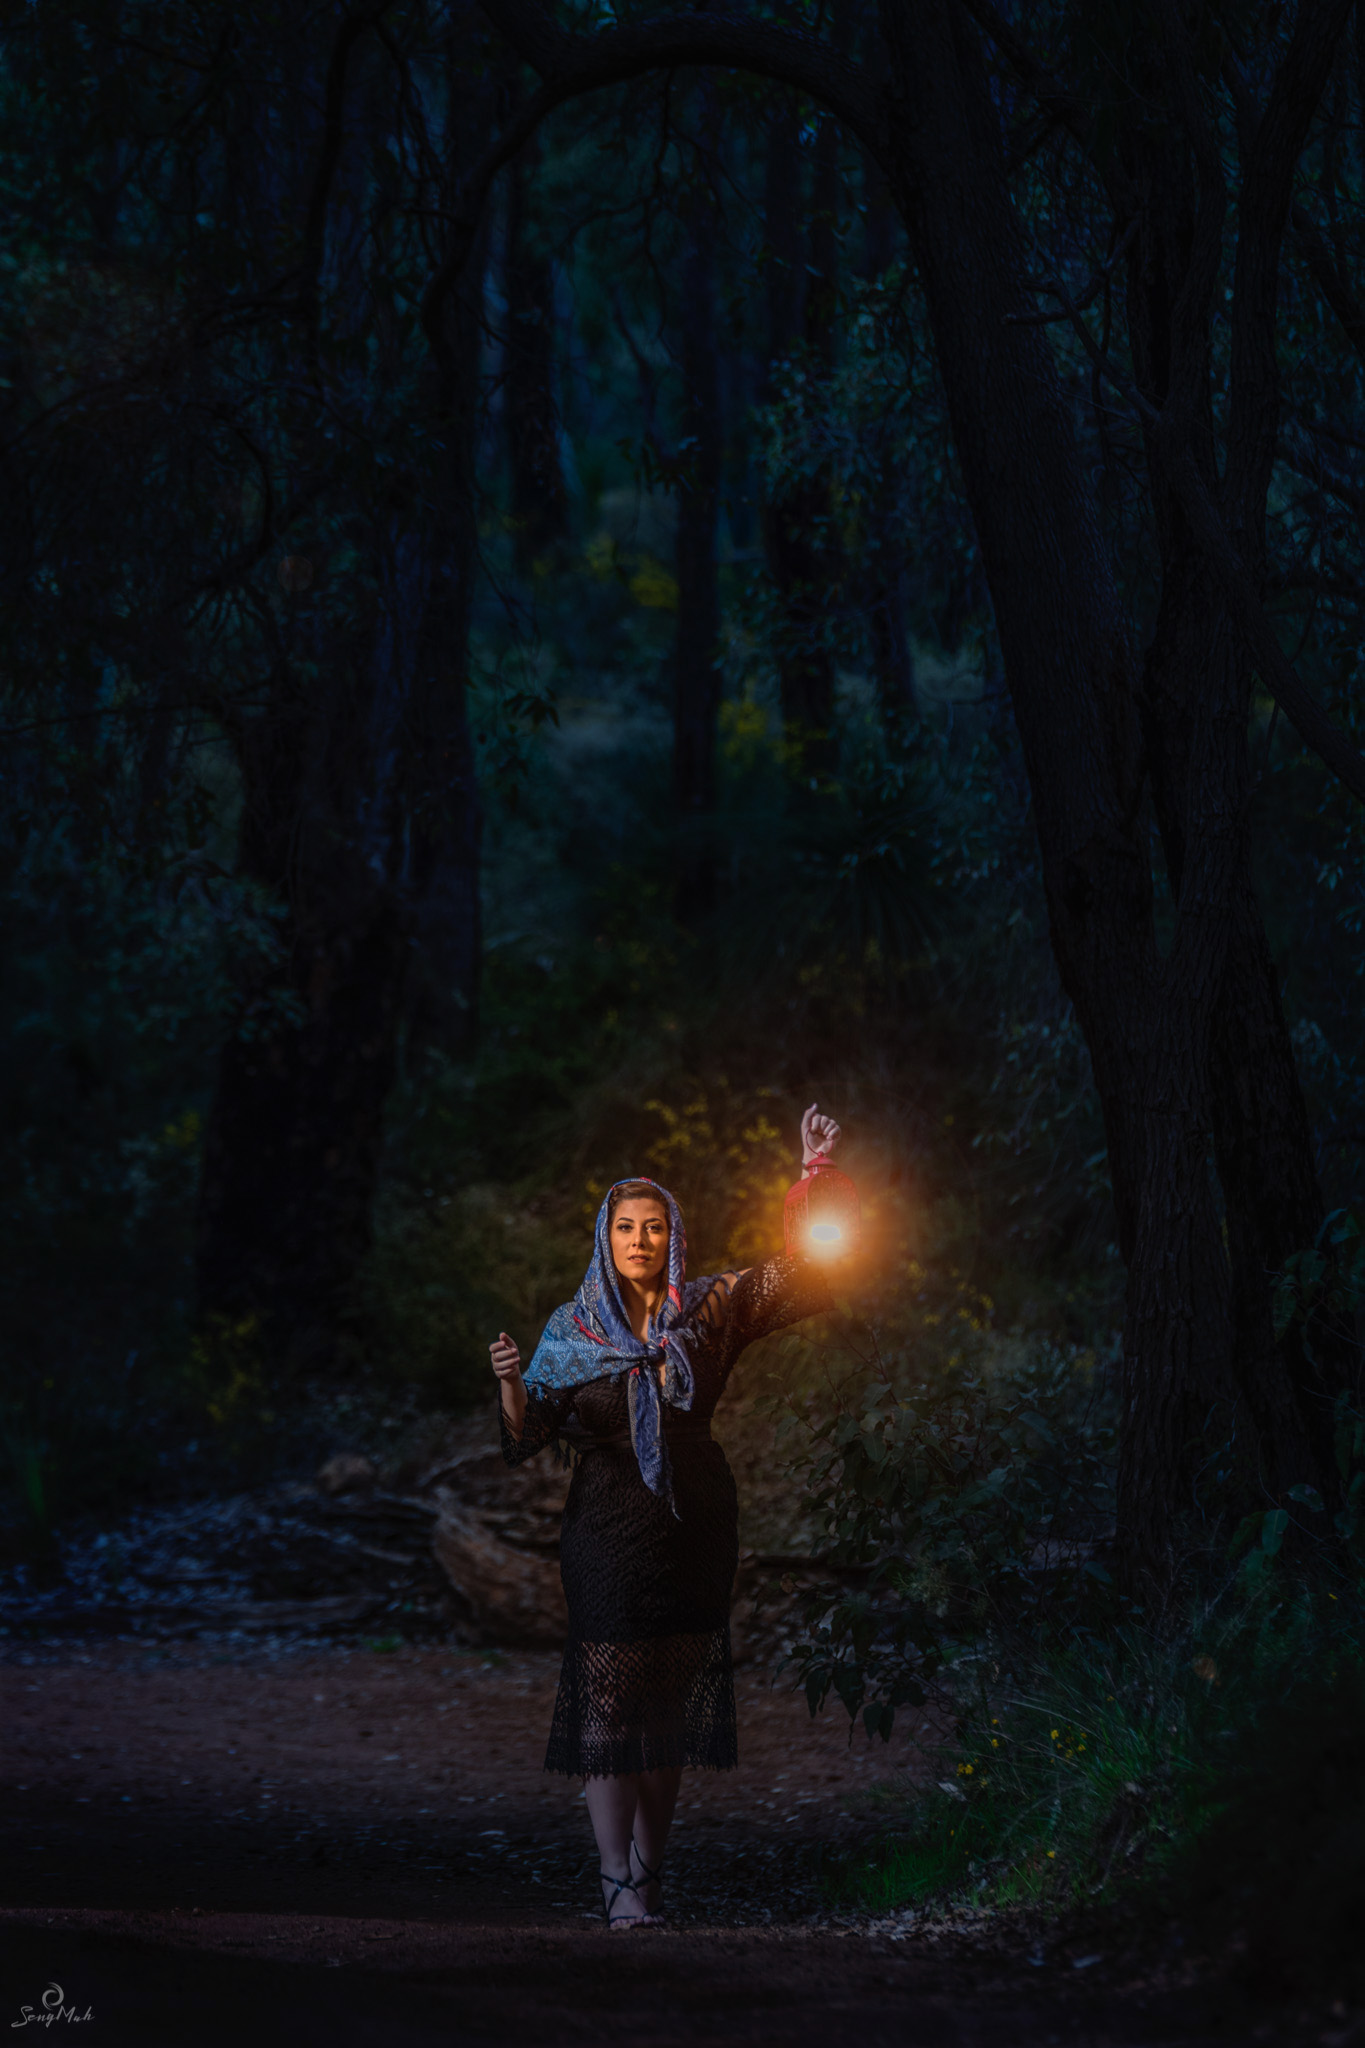 Woman with lantern